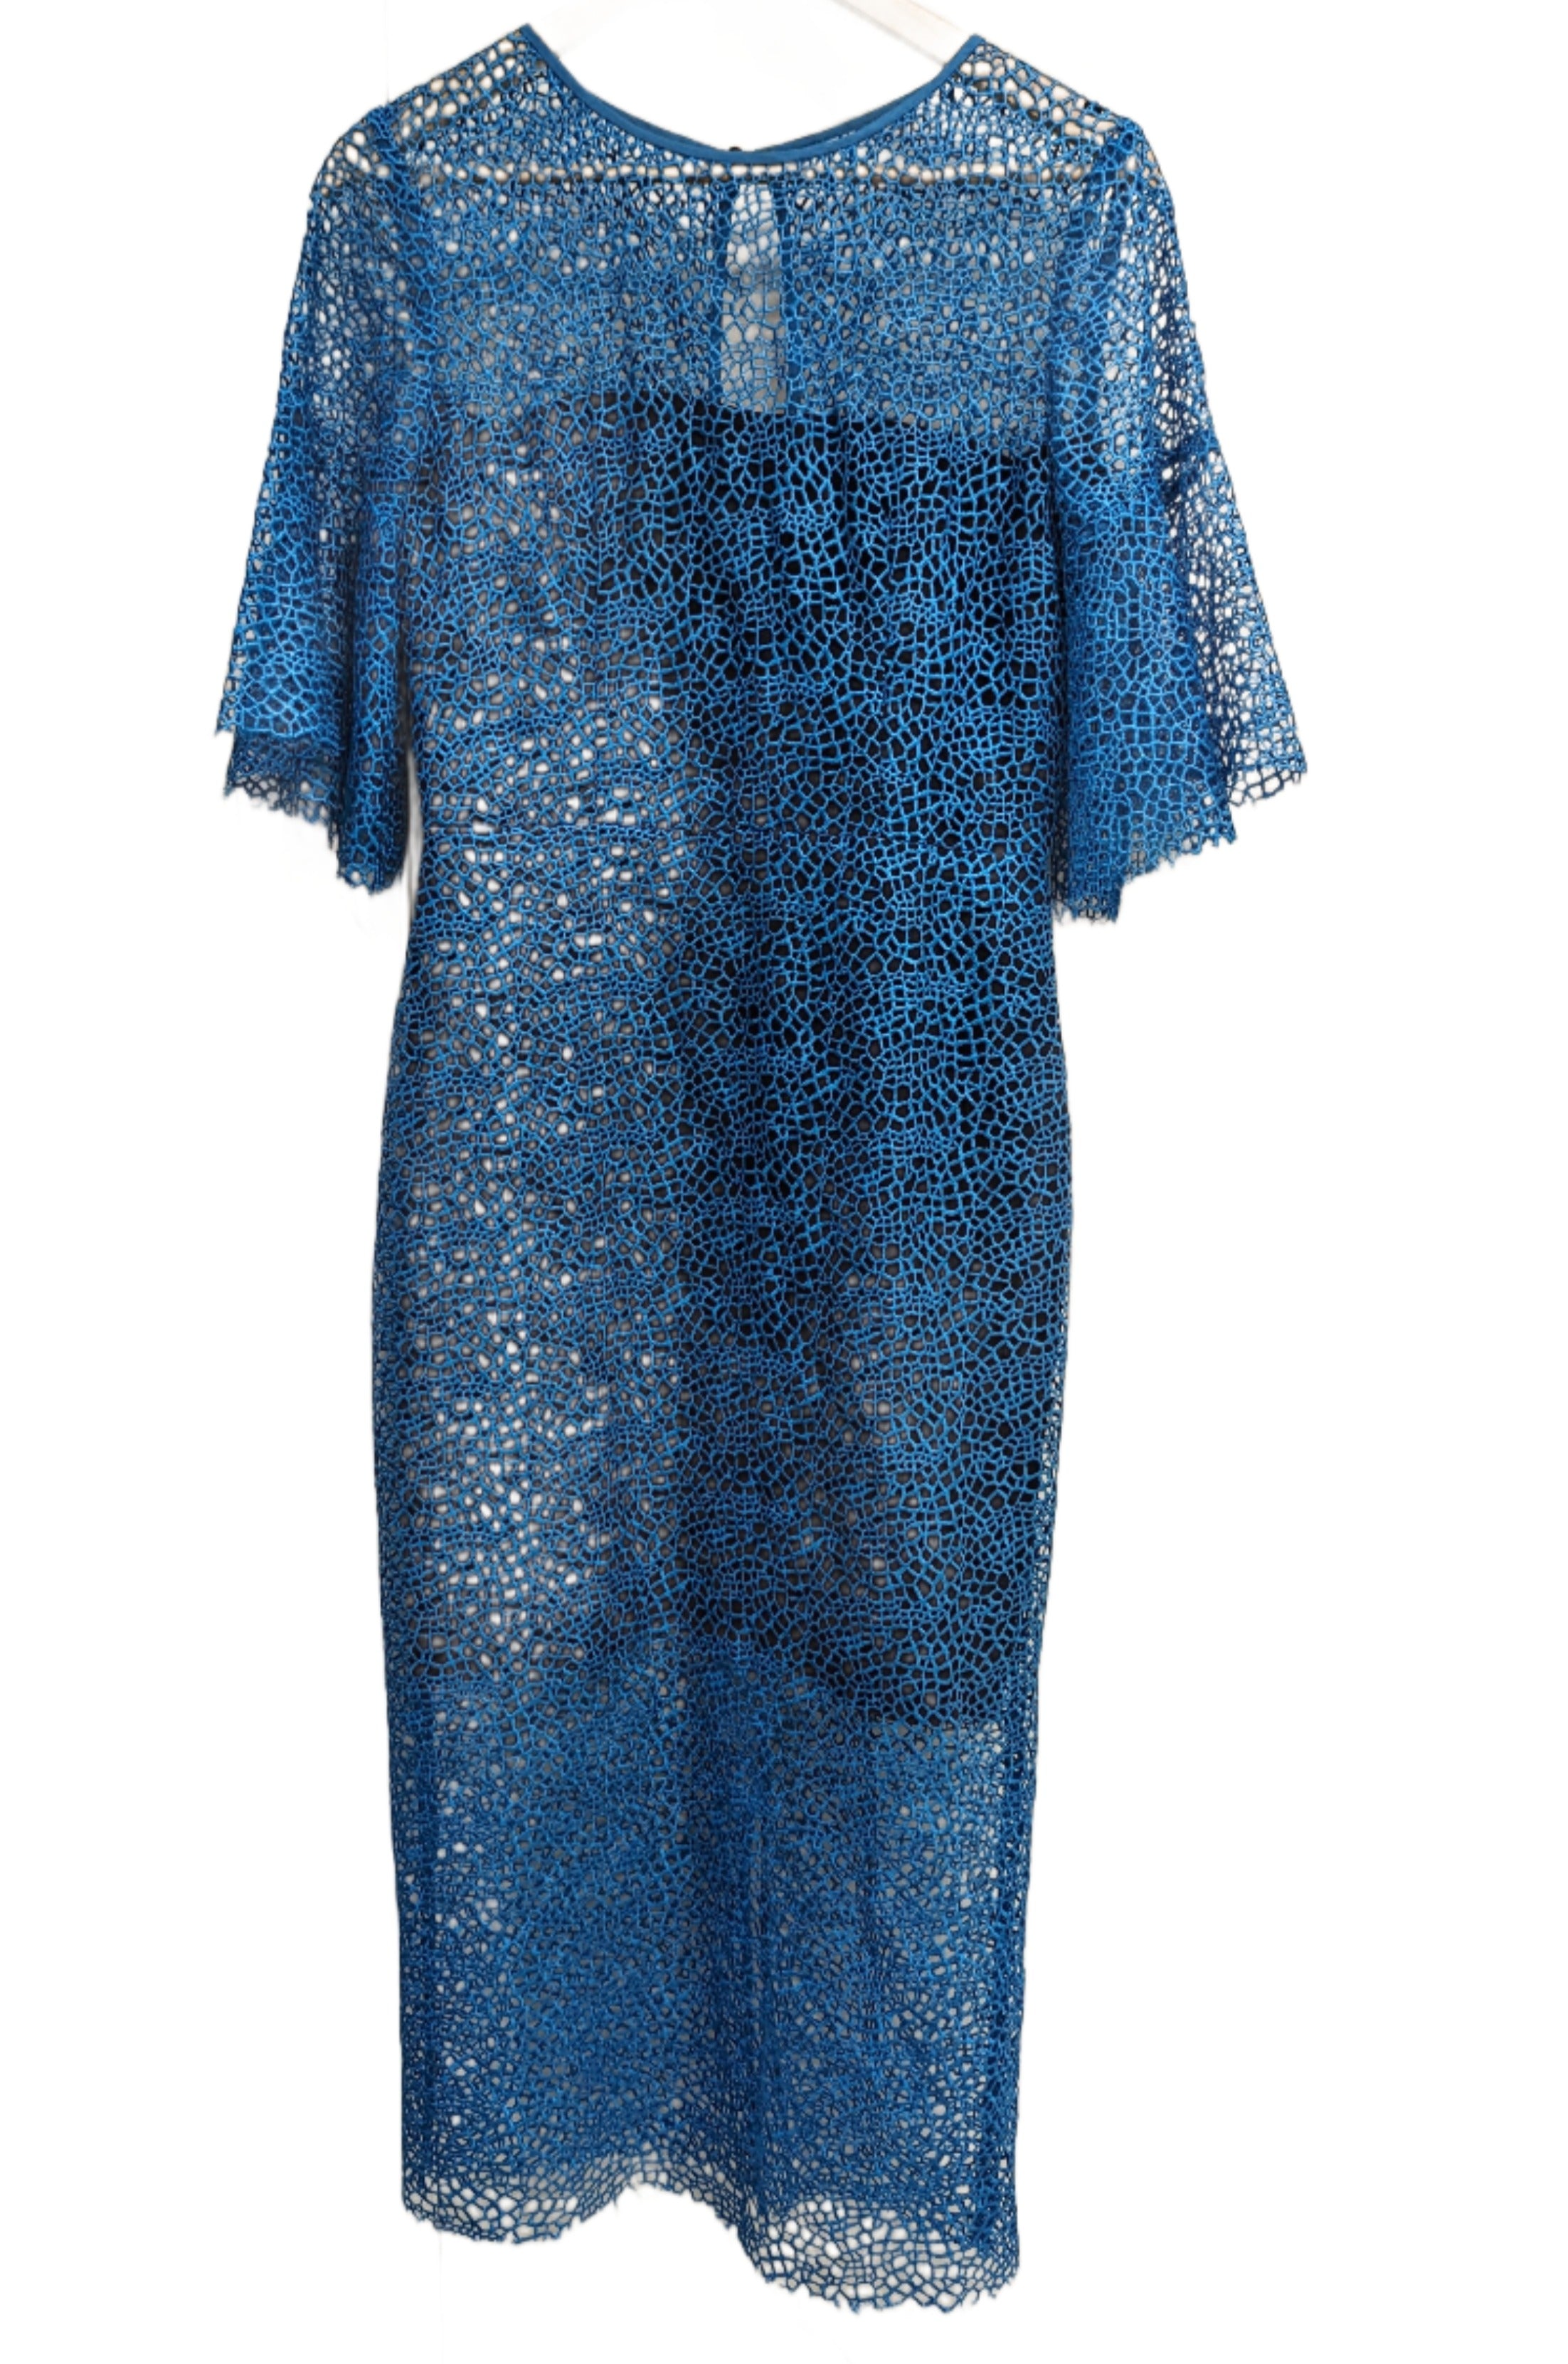 Smart Blue Netting Dress